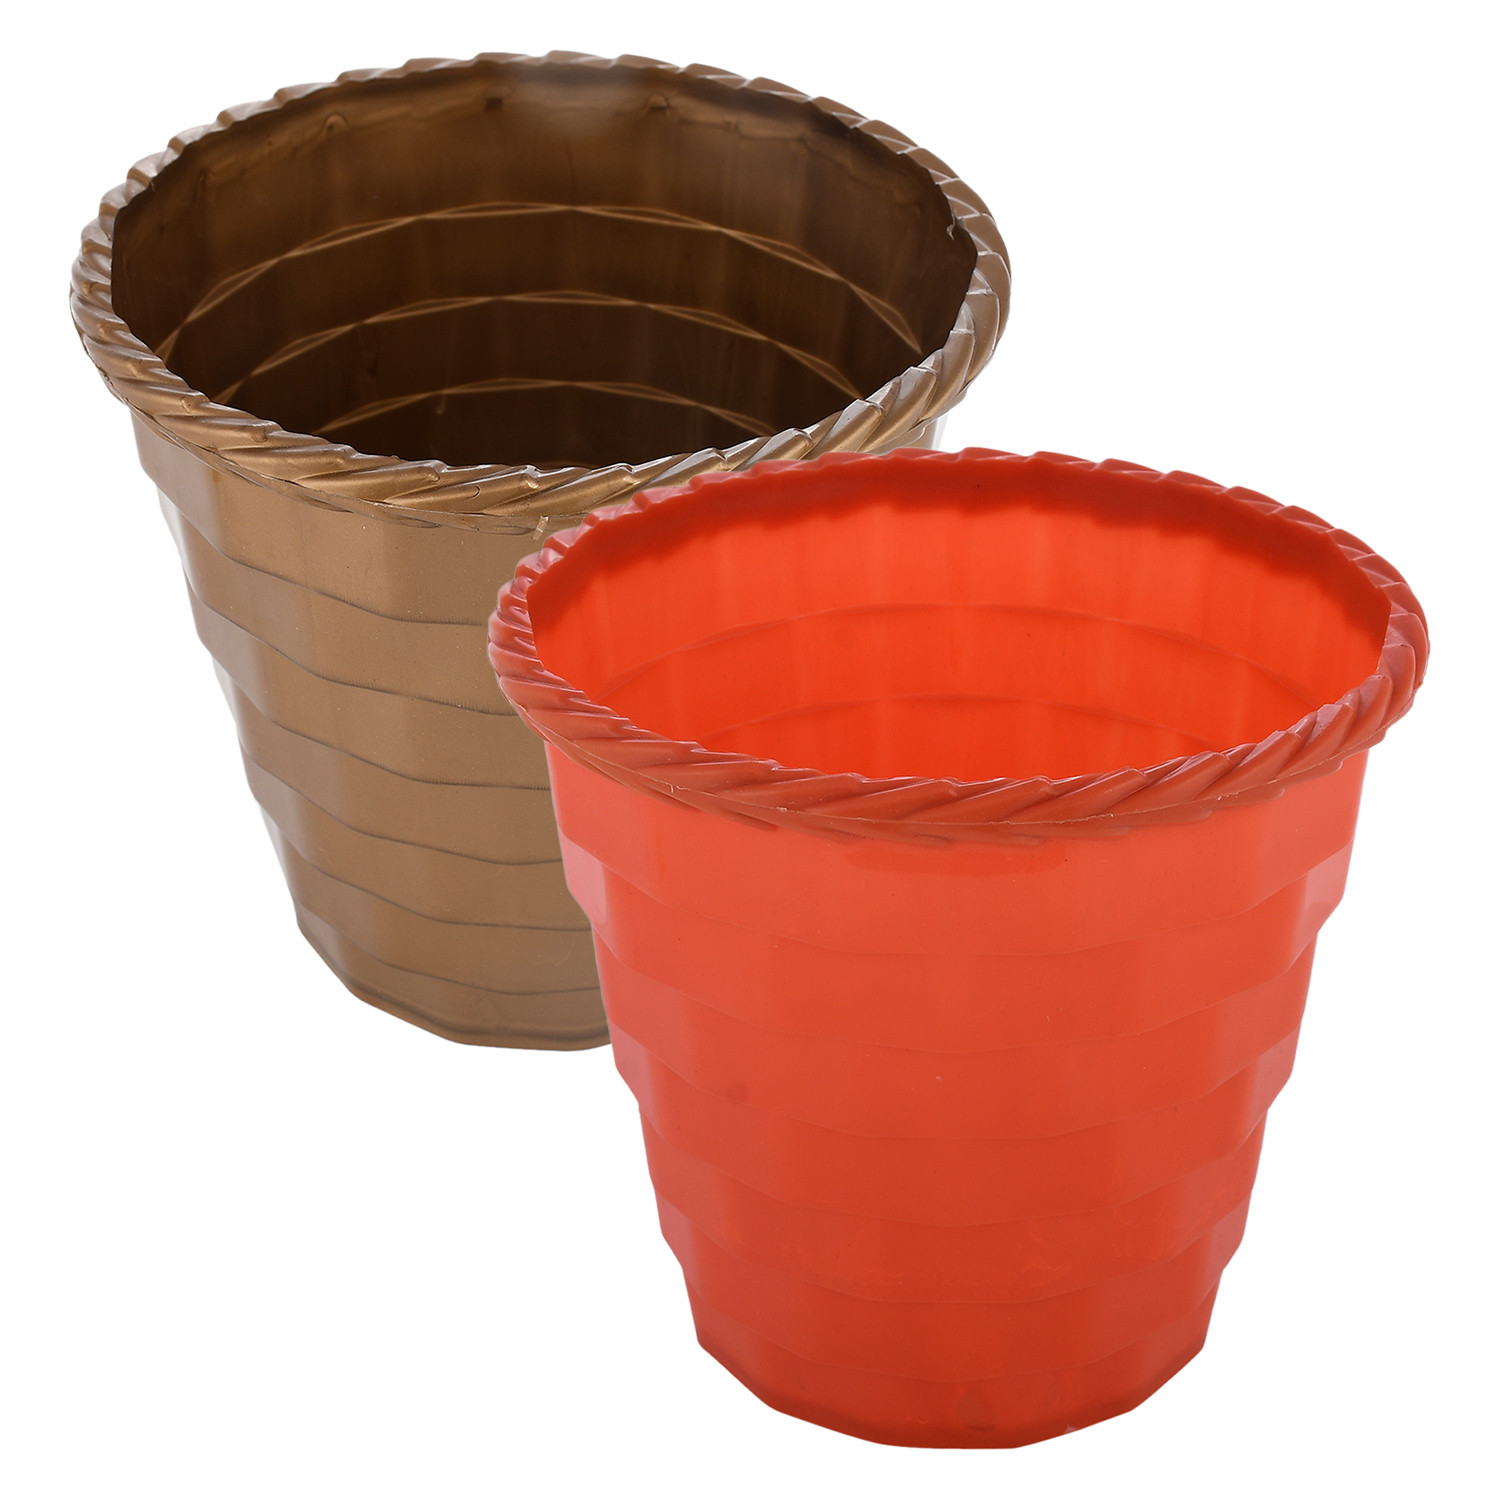 Kuber Industries Brick Flower Pot|Durable Plastic Flower Pots|Planters for Home Décor|Garden|Living Room|Balcony|8 Inch|Pack of 2 (Orange & Golden)